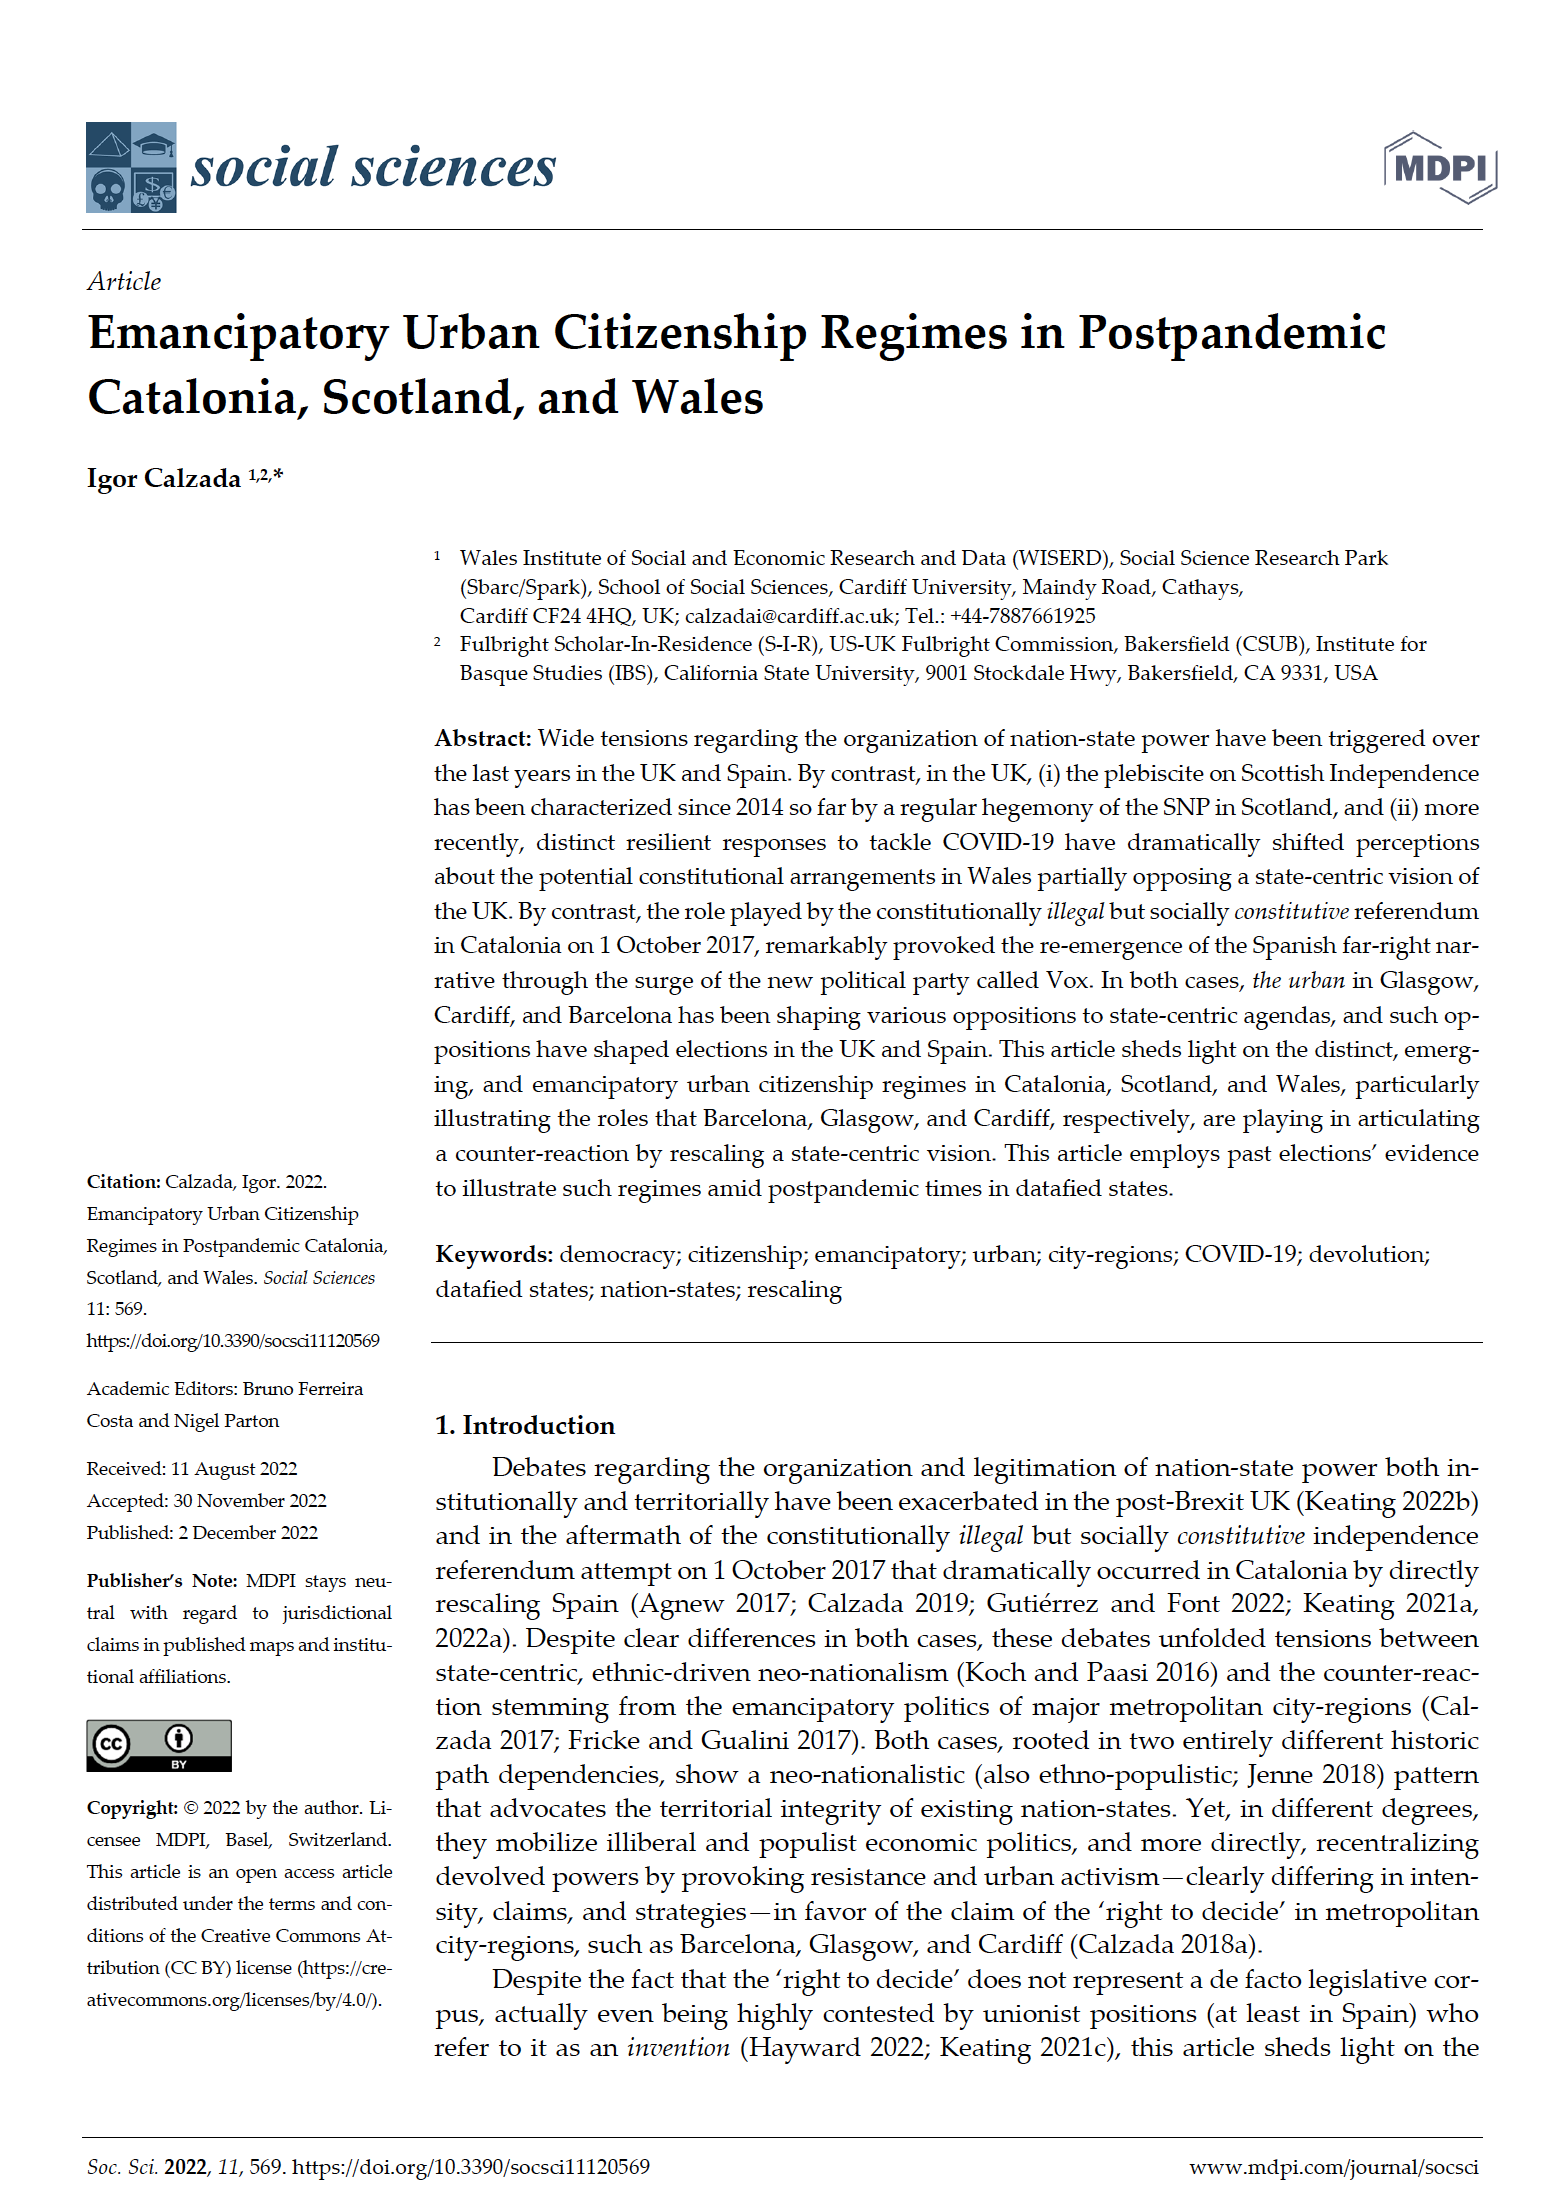 Emancipatory Urban Citizenship Regimes in Postpandemic Catalonia, Scotland, and Wales